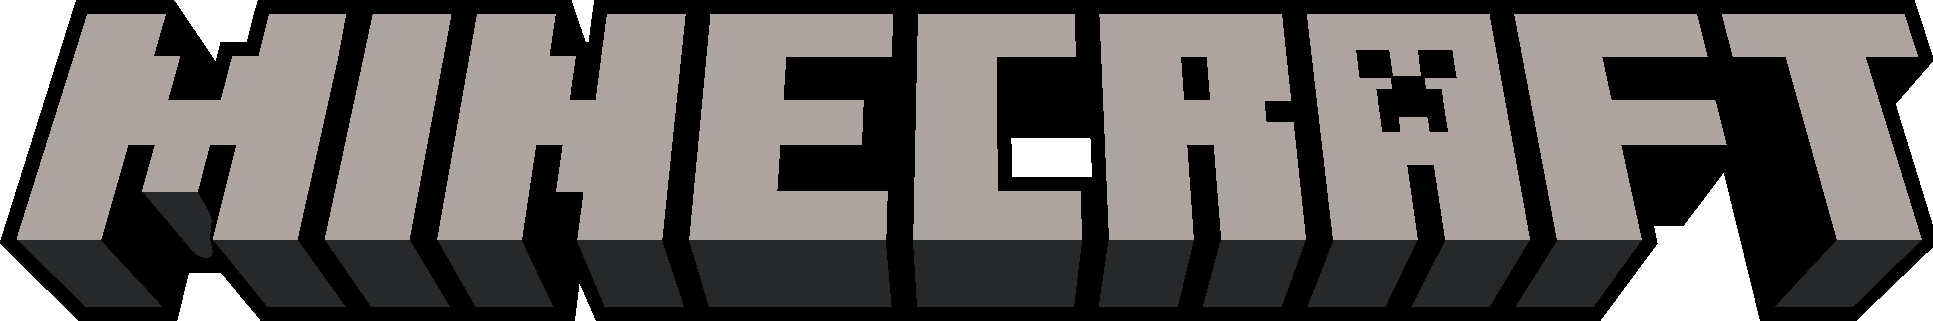 Minecraft Logo antiga Image - ID: 378073 - Image Abyss